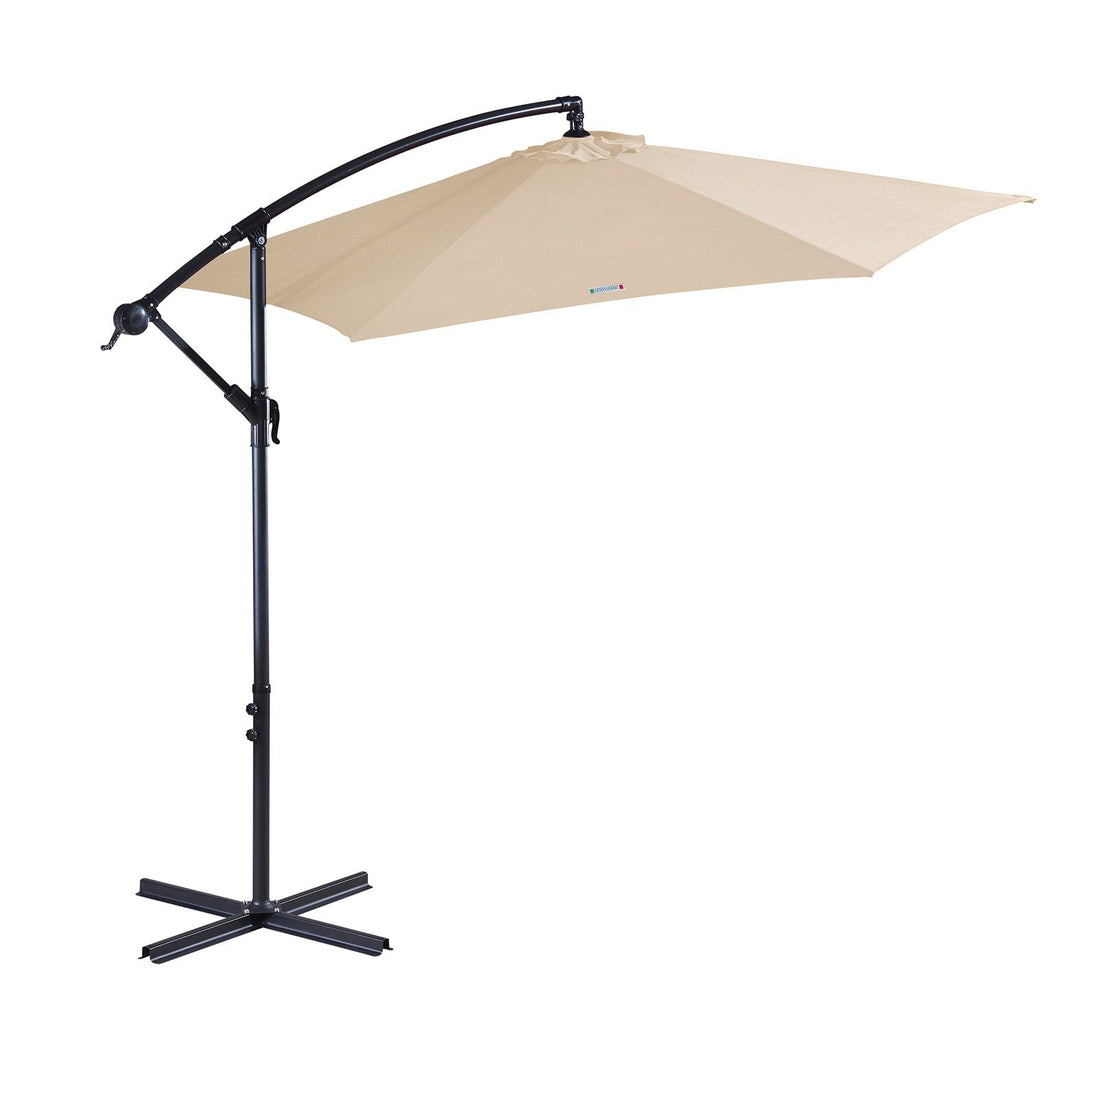 Milano 3M Outdoor Umbrella Cantilever With Protective Cover Patio Garden Shade-Outdoor Umbrellas-PEROZ Accessories